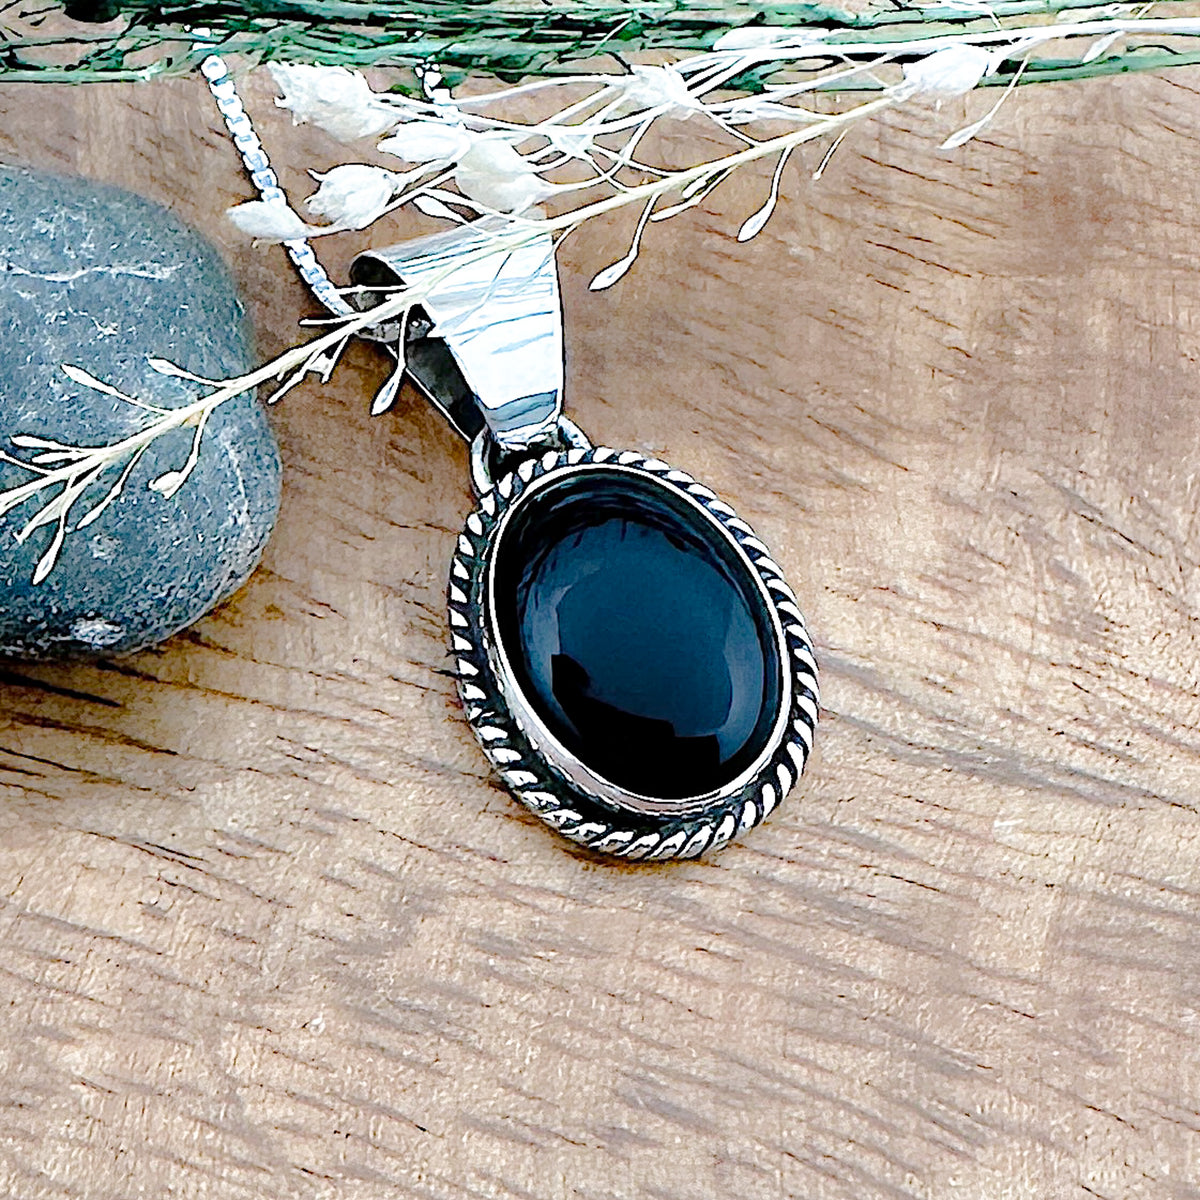 Shot of a Black Onyx pendant